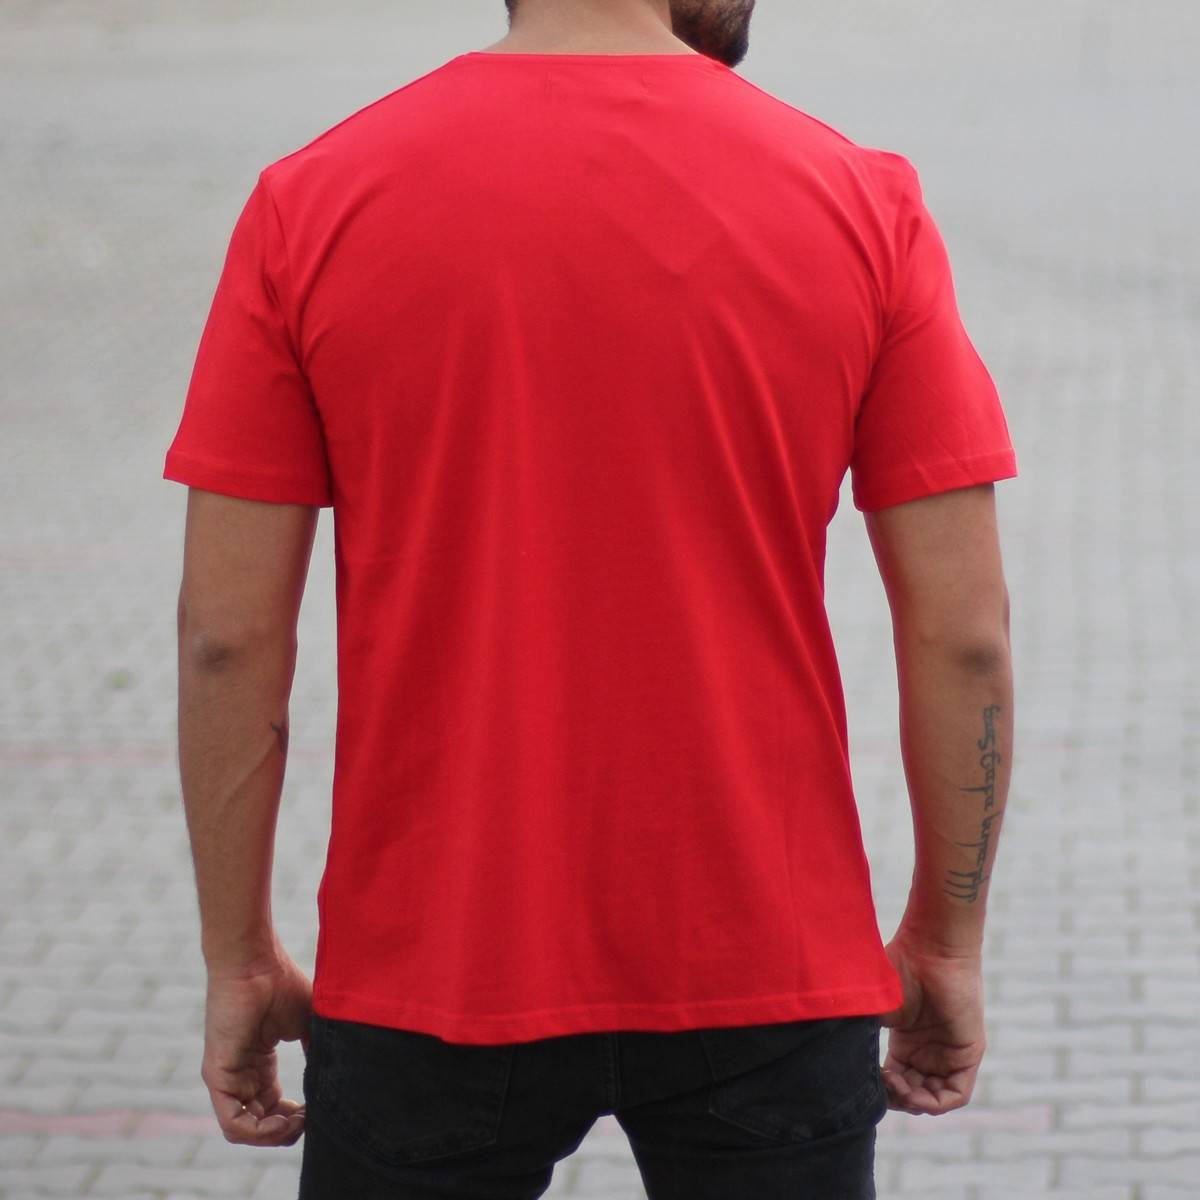 red tshirt for men